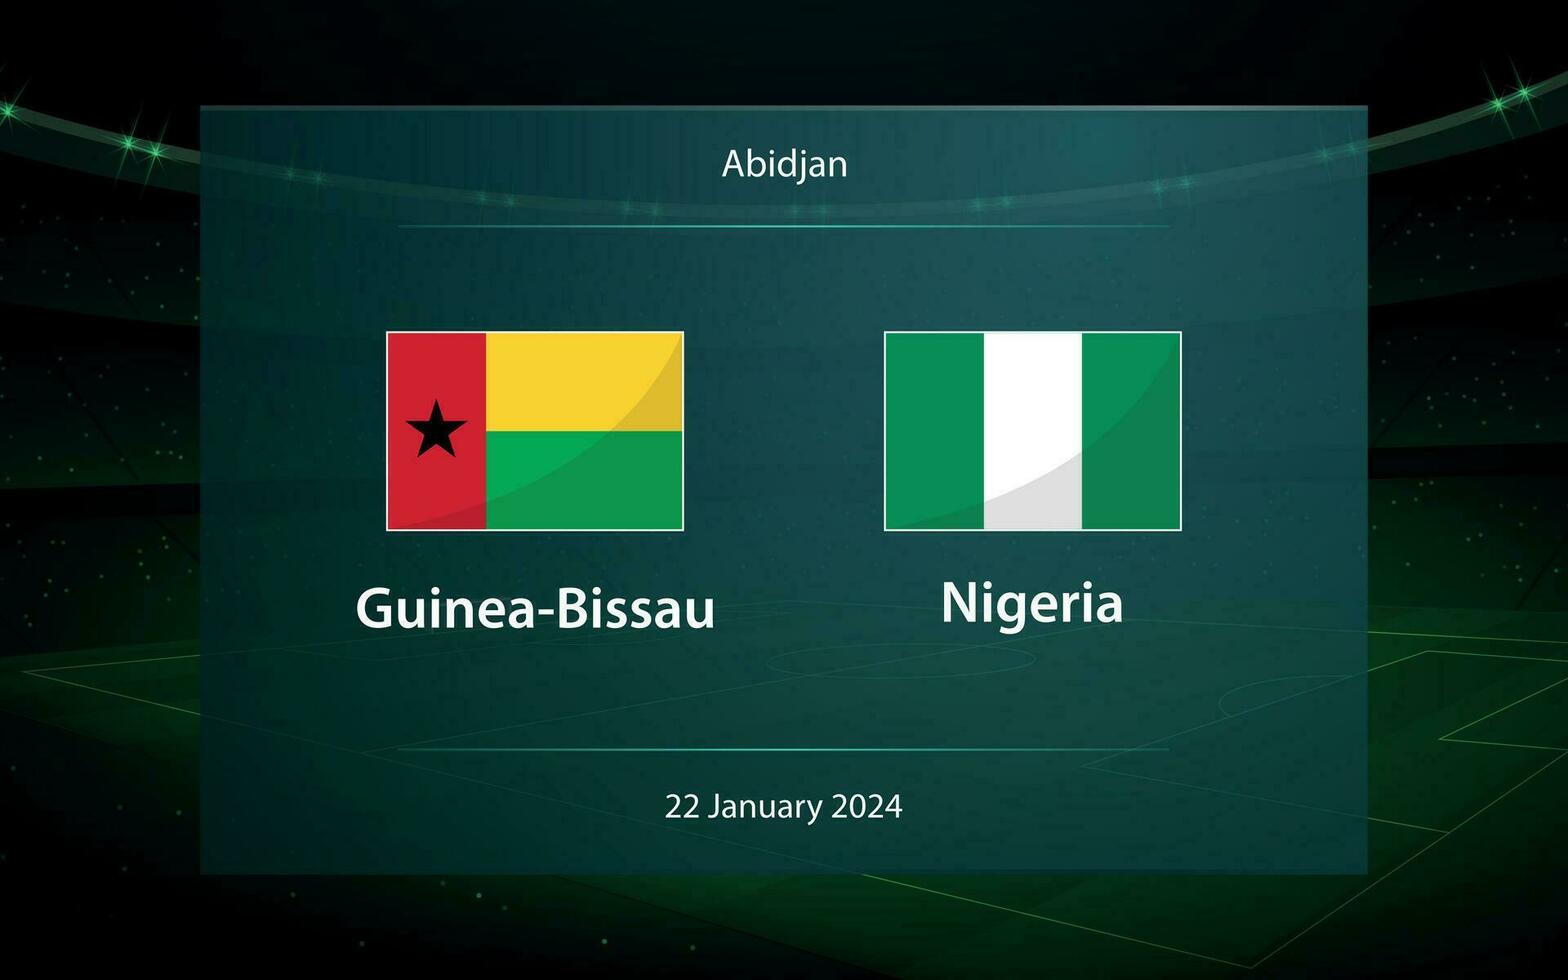 Guinea-Bissau vs Nigeria. Football scoreboard broadcast graphic vector